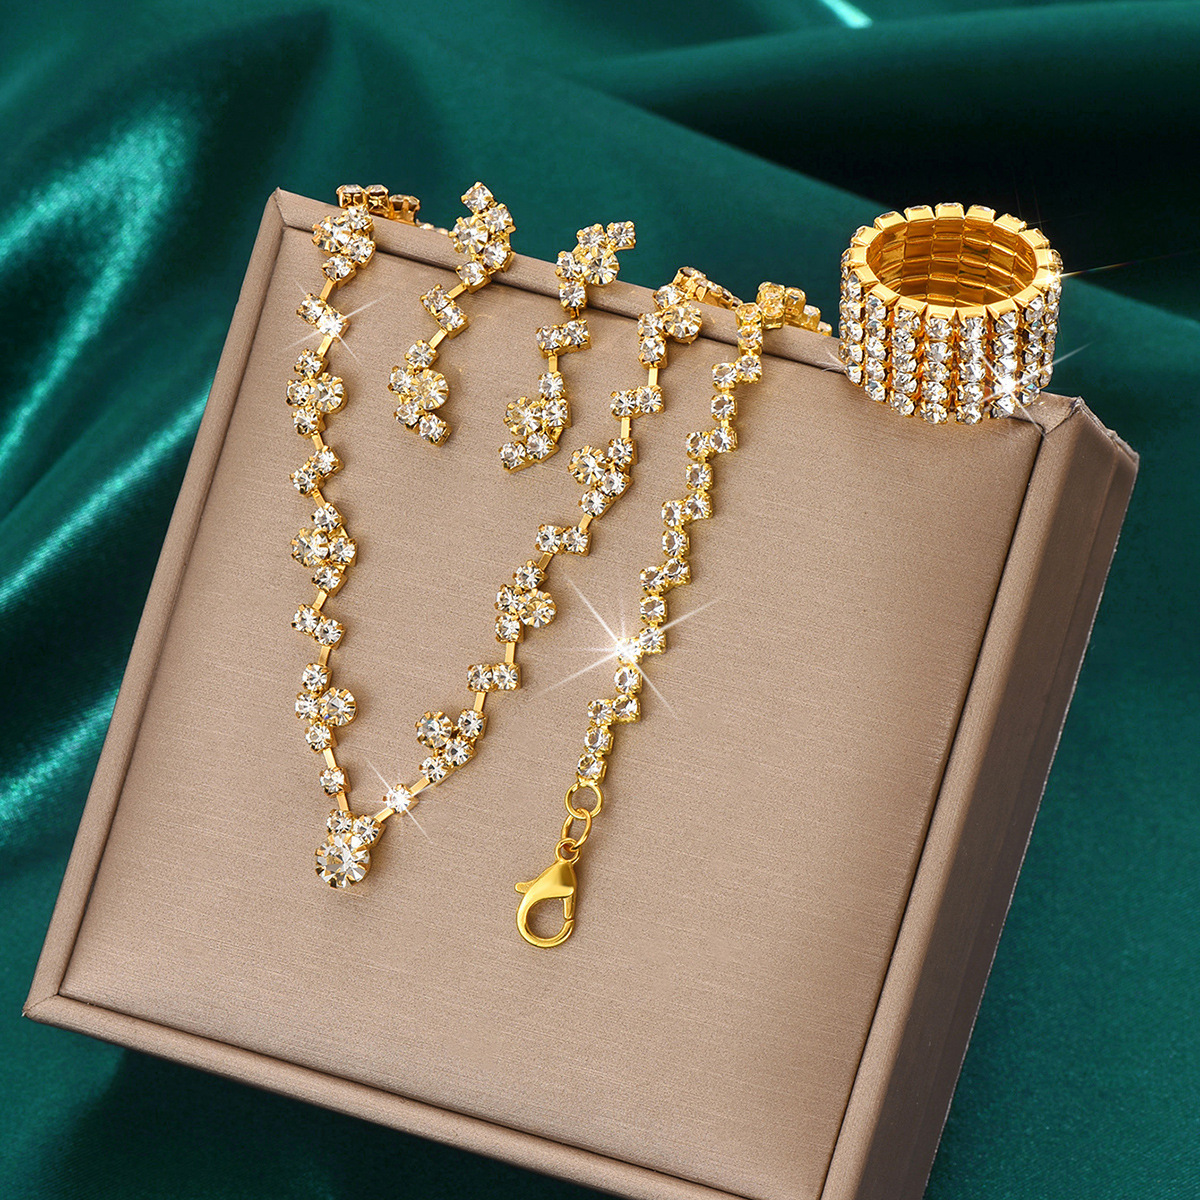 424785424-5 Gold necklace earrings bracelet ring set